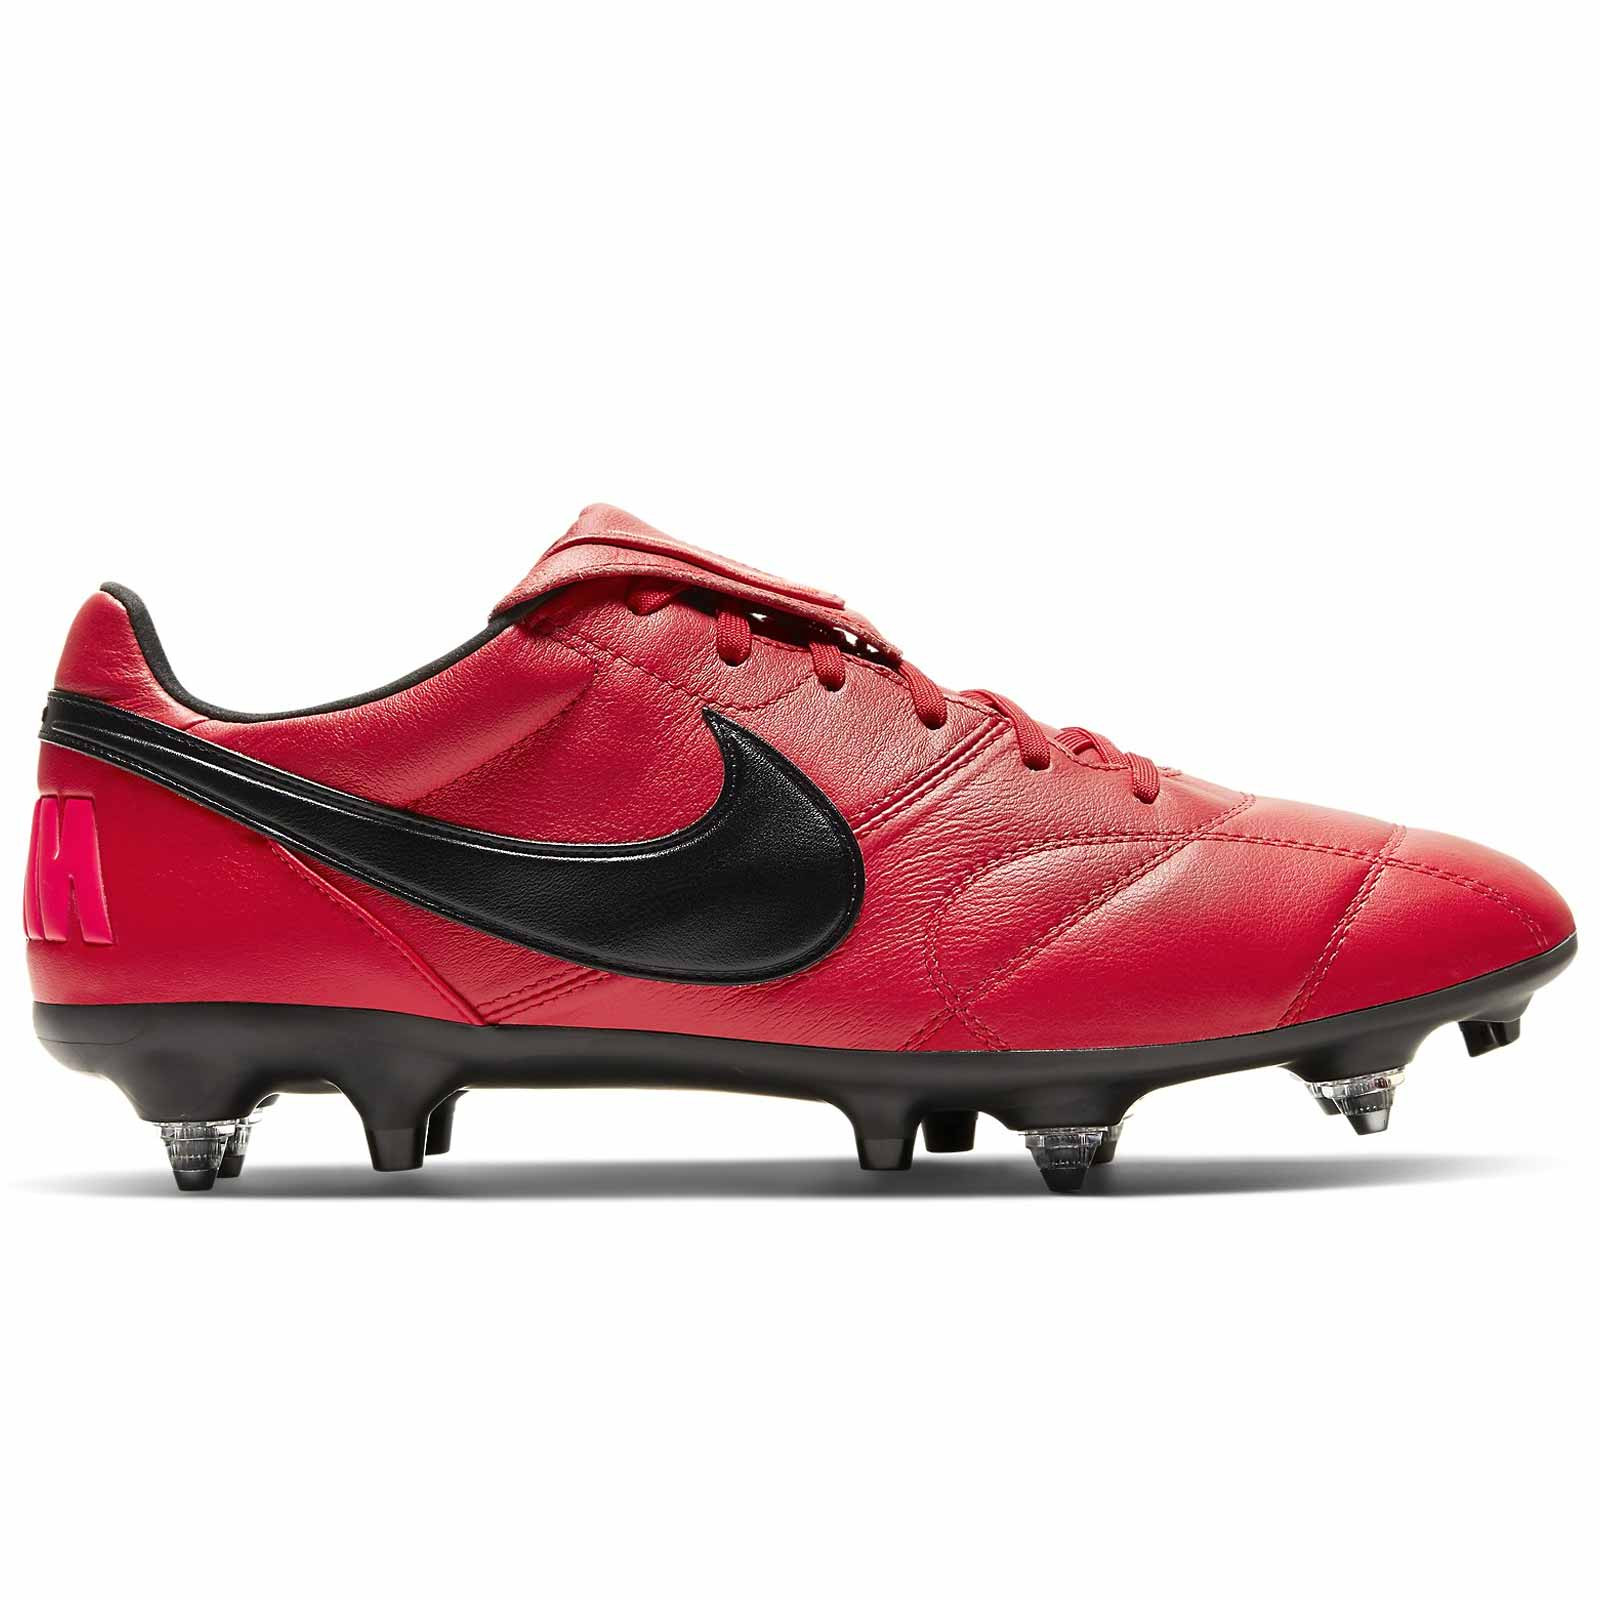 Botas Nike Premier II SG-PRO AC rojas negras |futbolmania